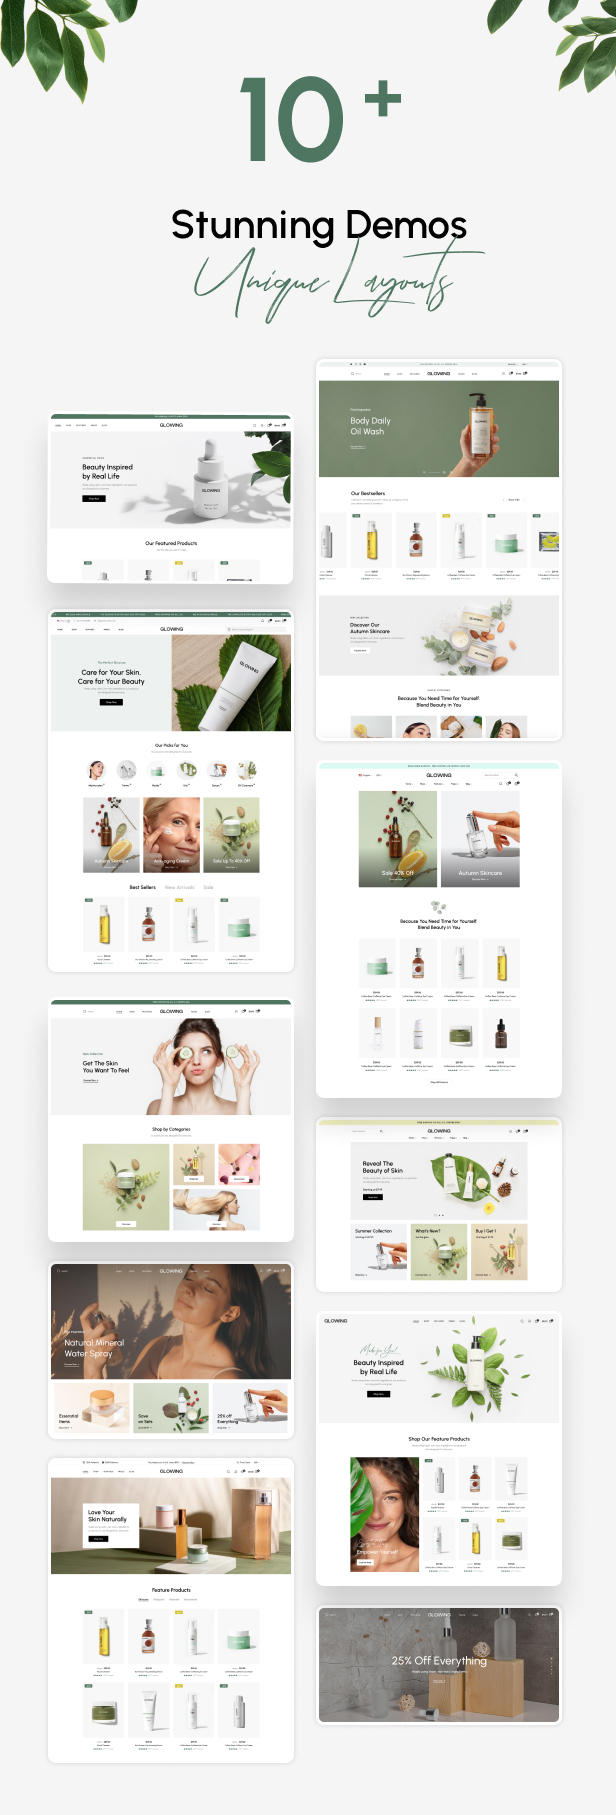 Glowing – Beauty & Cosmetics Shop HTML Template